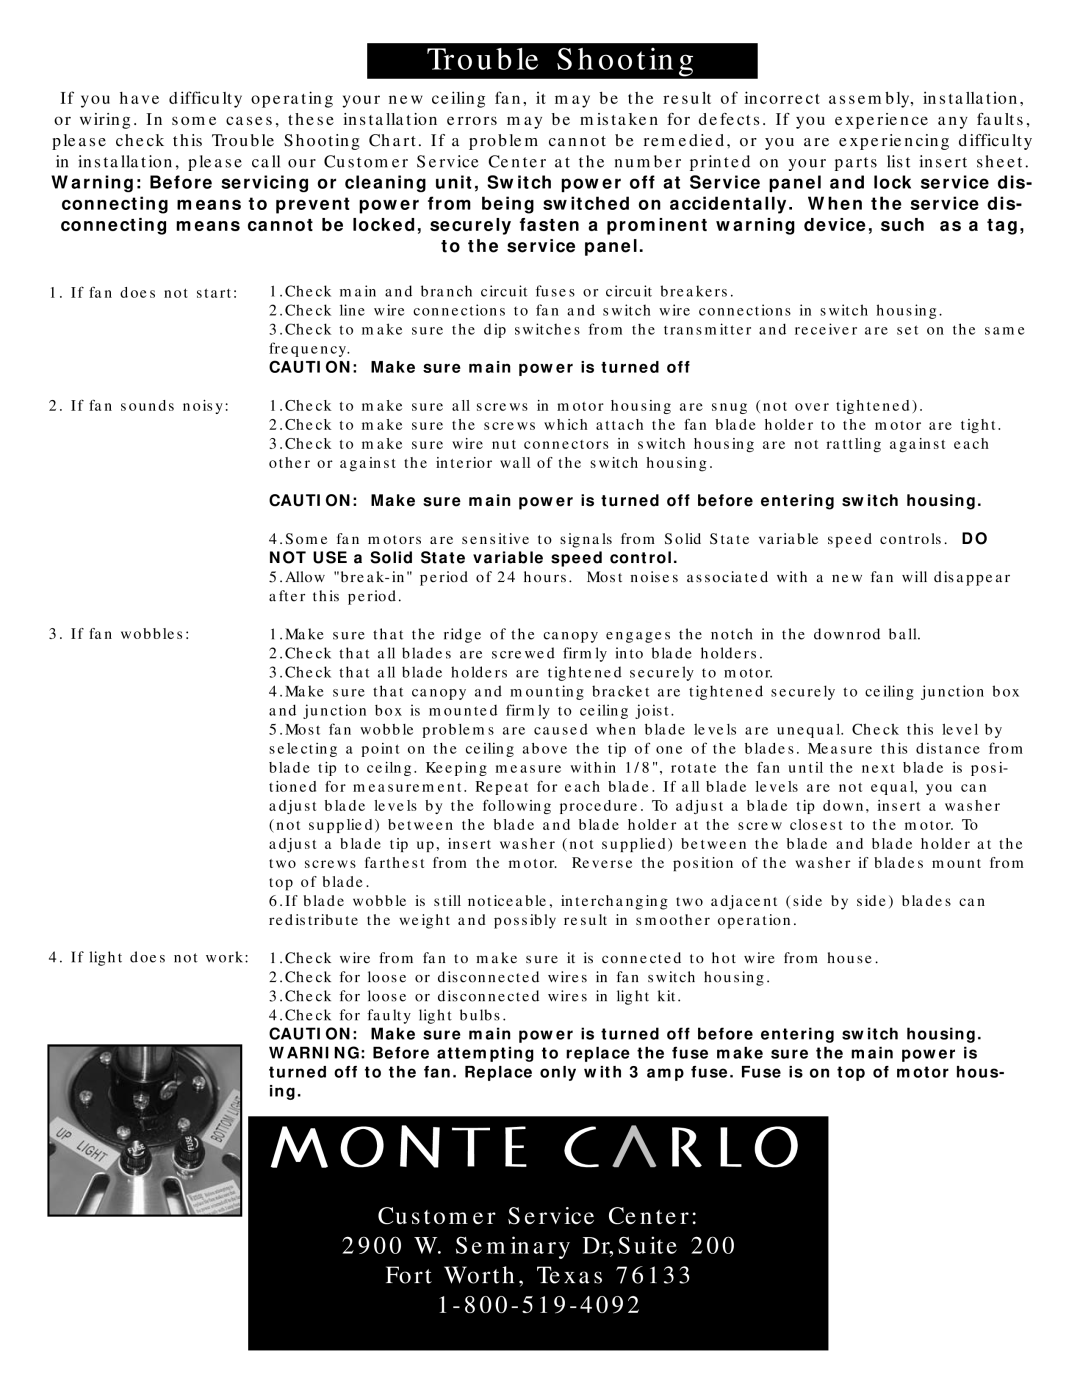 Monte Carlo Fan Company 5OBR52 owner manual Customer Service Center 2900 W. Seminary Dr,Suite 